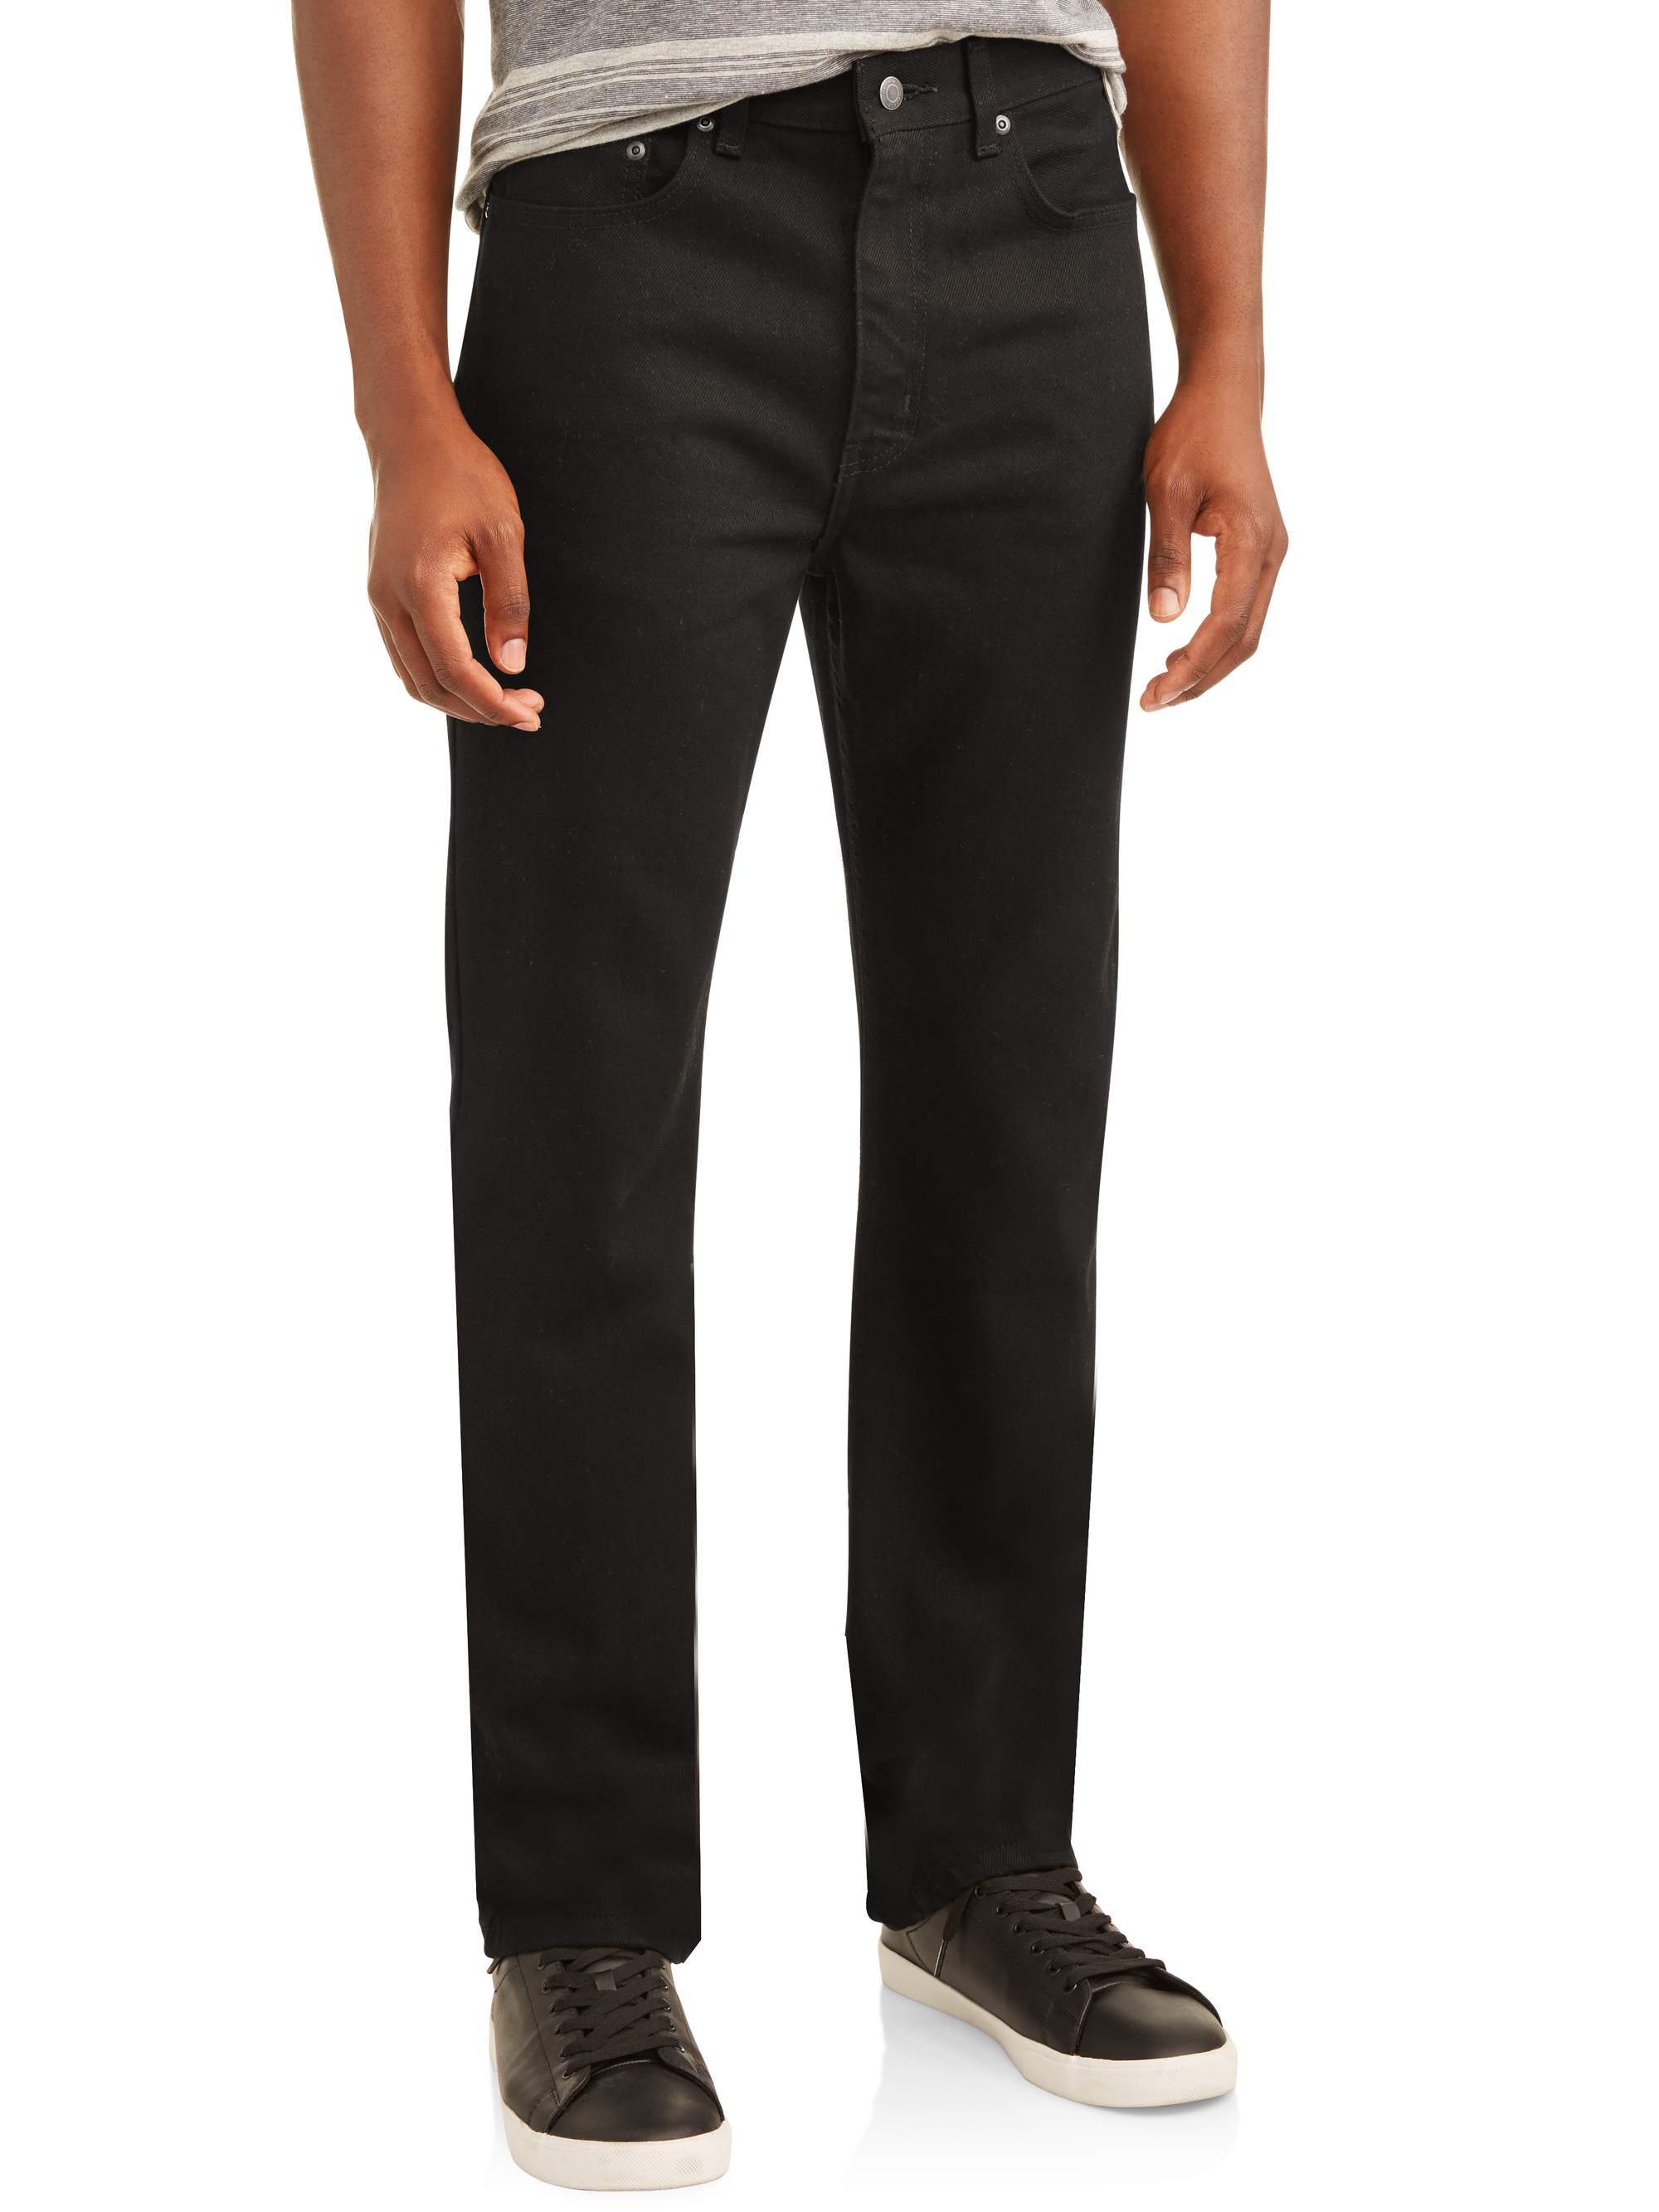 George Men's and Big Men's 100% Cotton Regular Fit Jeans - image 1 of 9